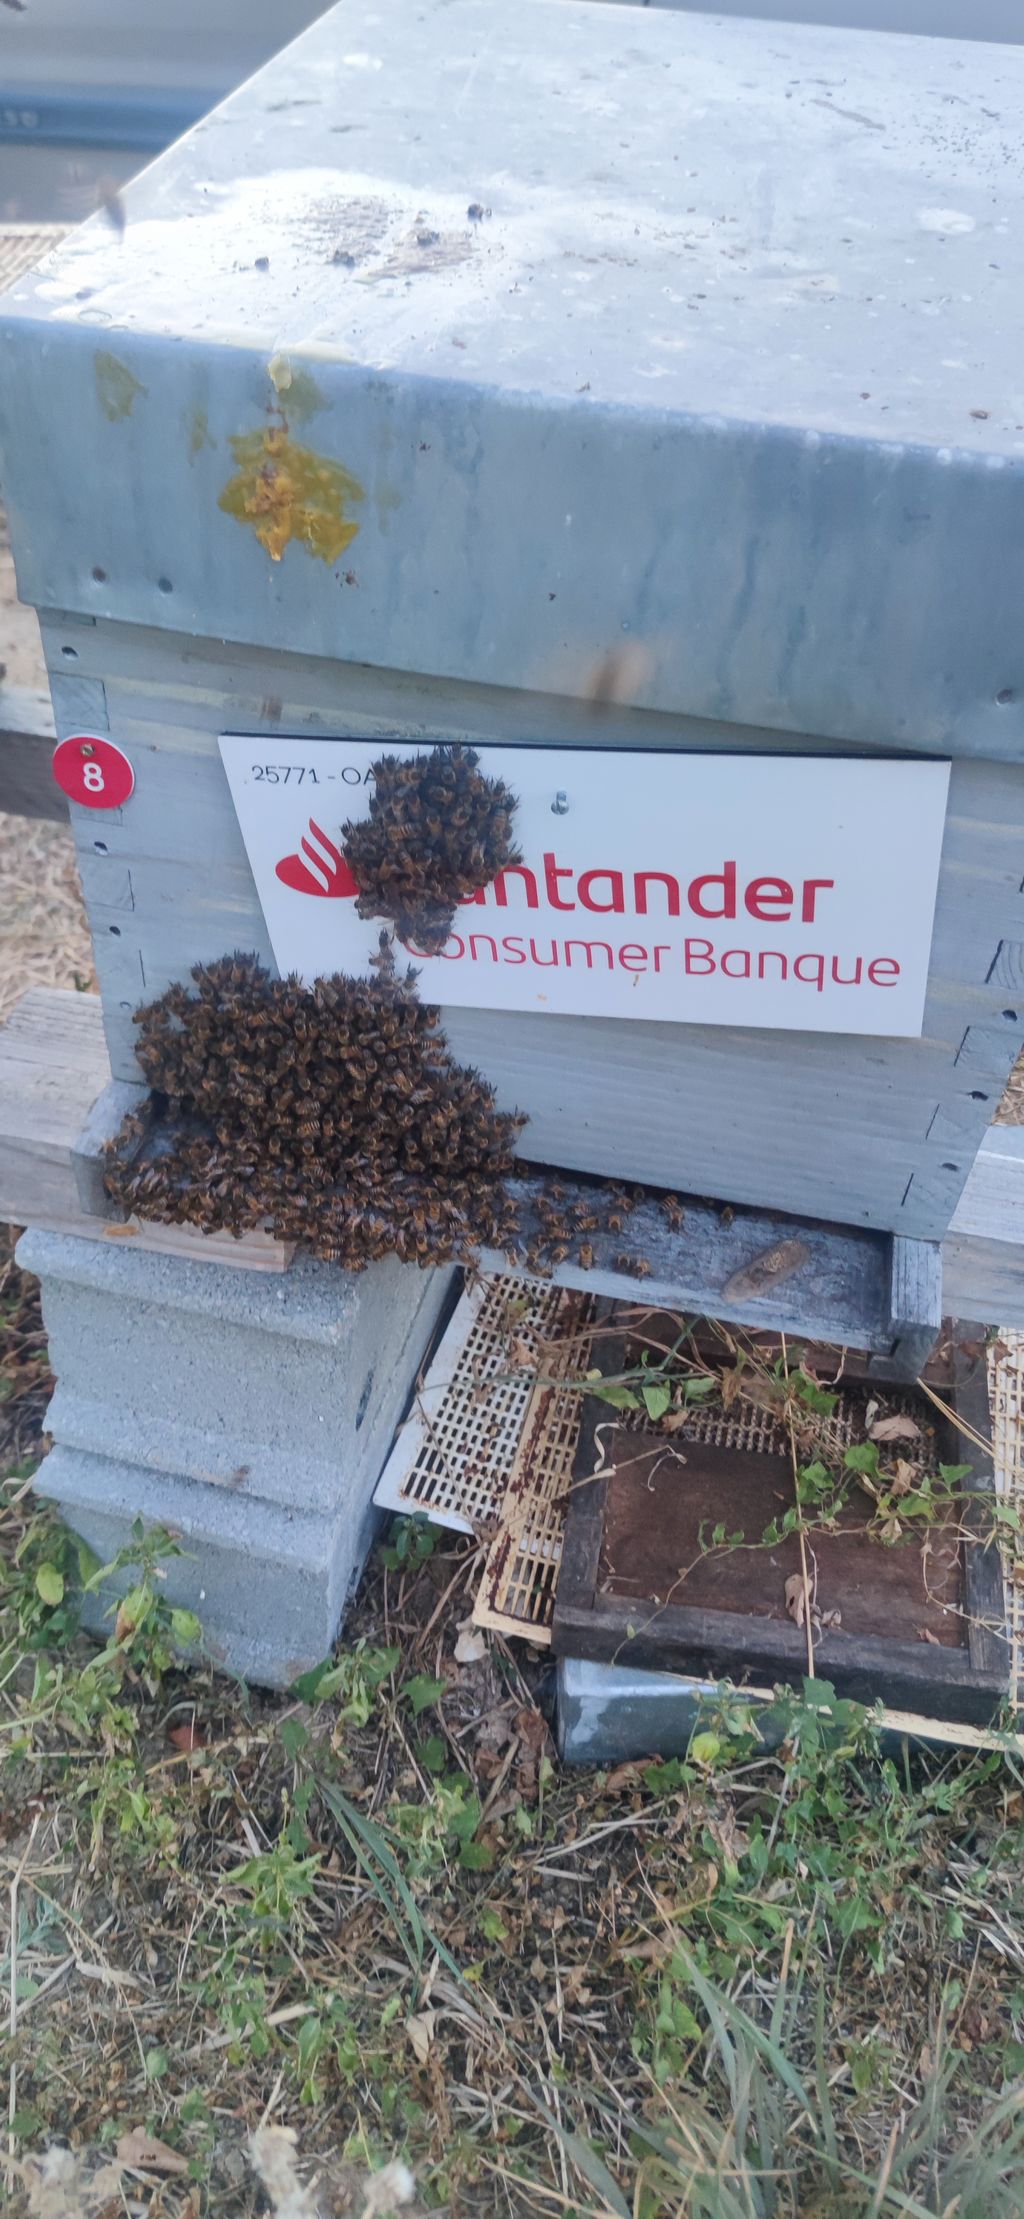 La ruche Santander Consumer Banque